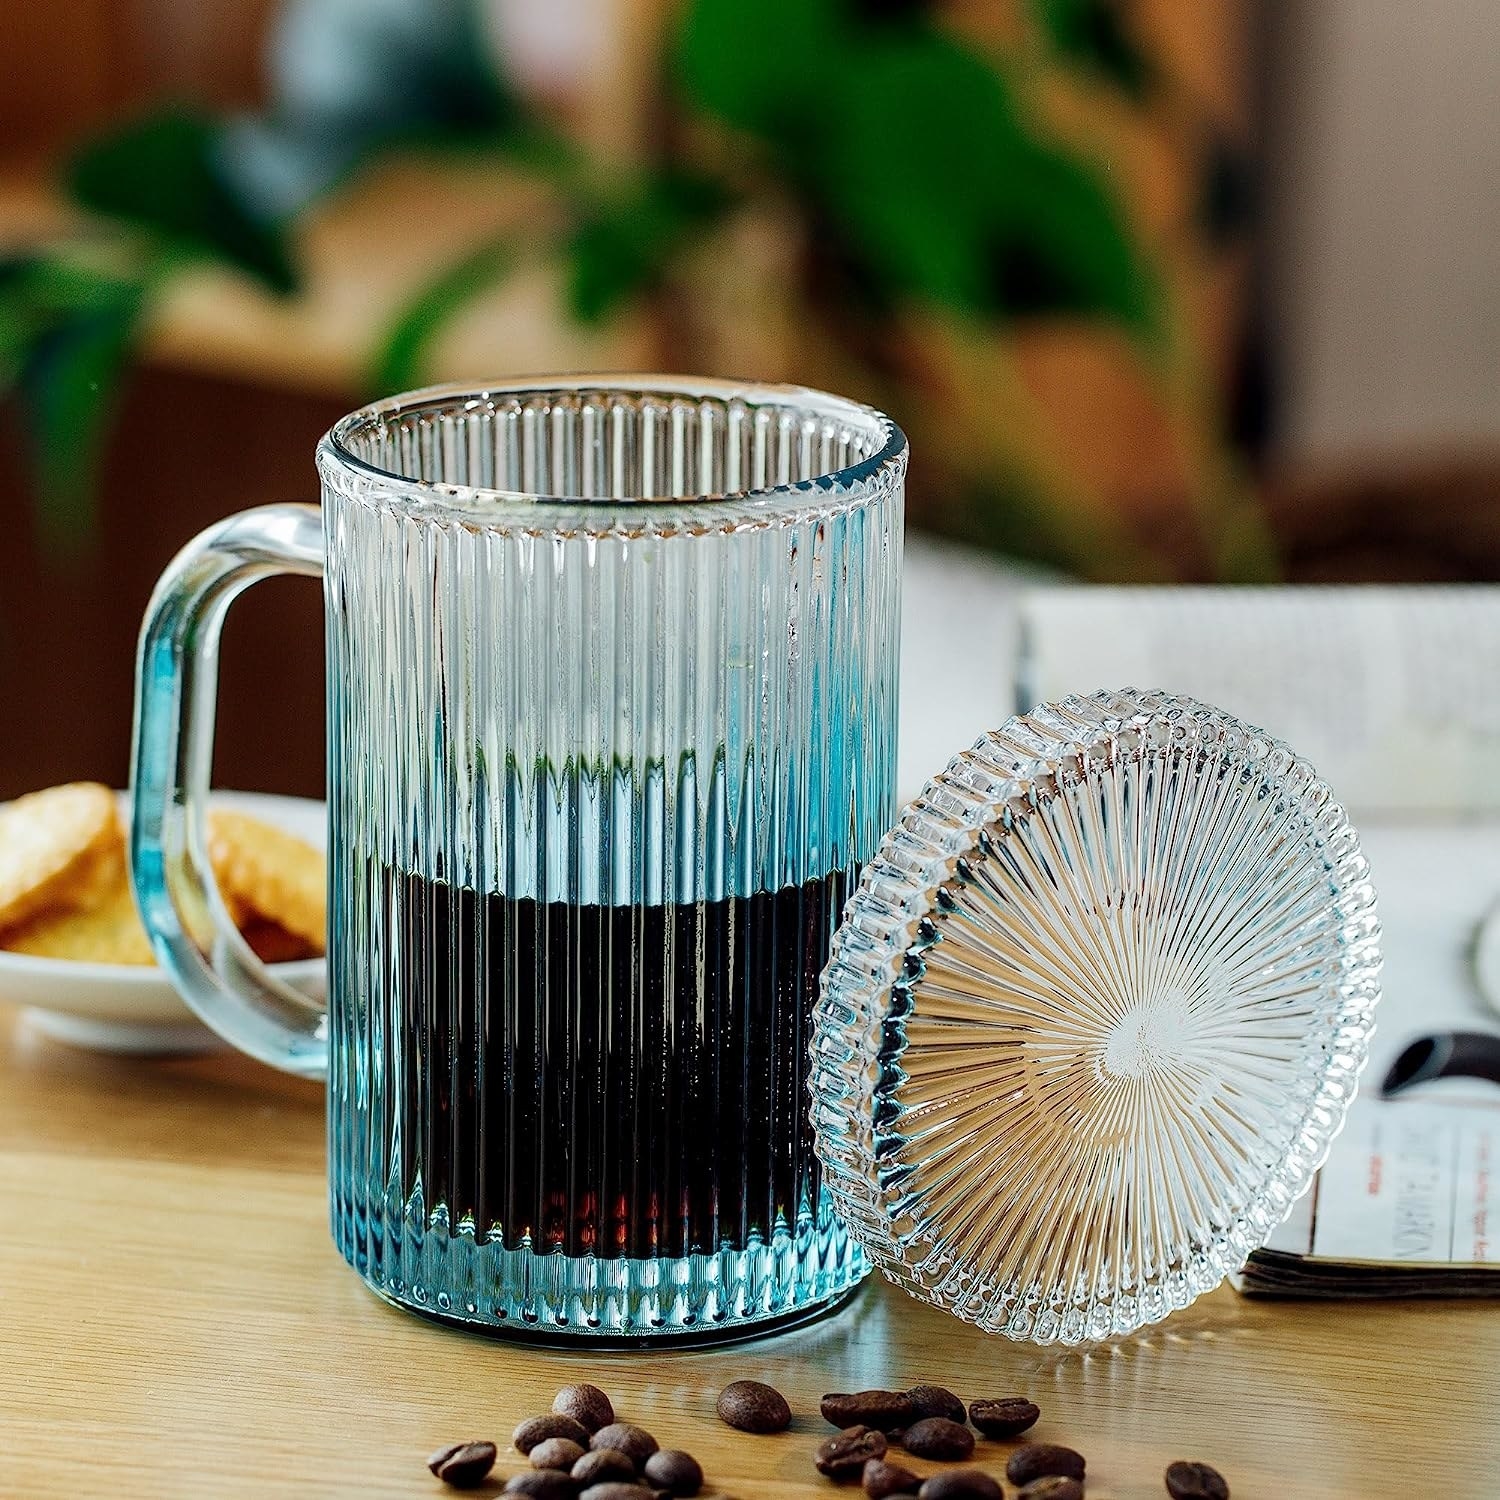 The blue mug with coffee and lid resting on side of mug